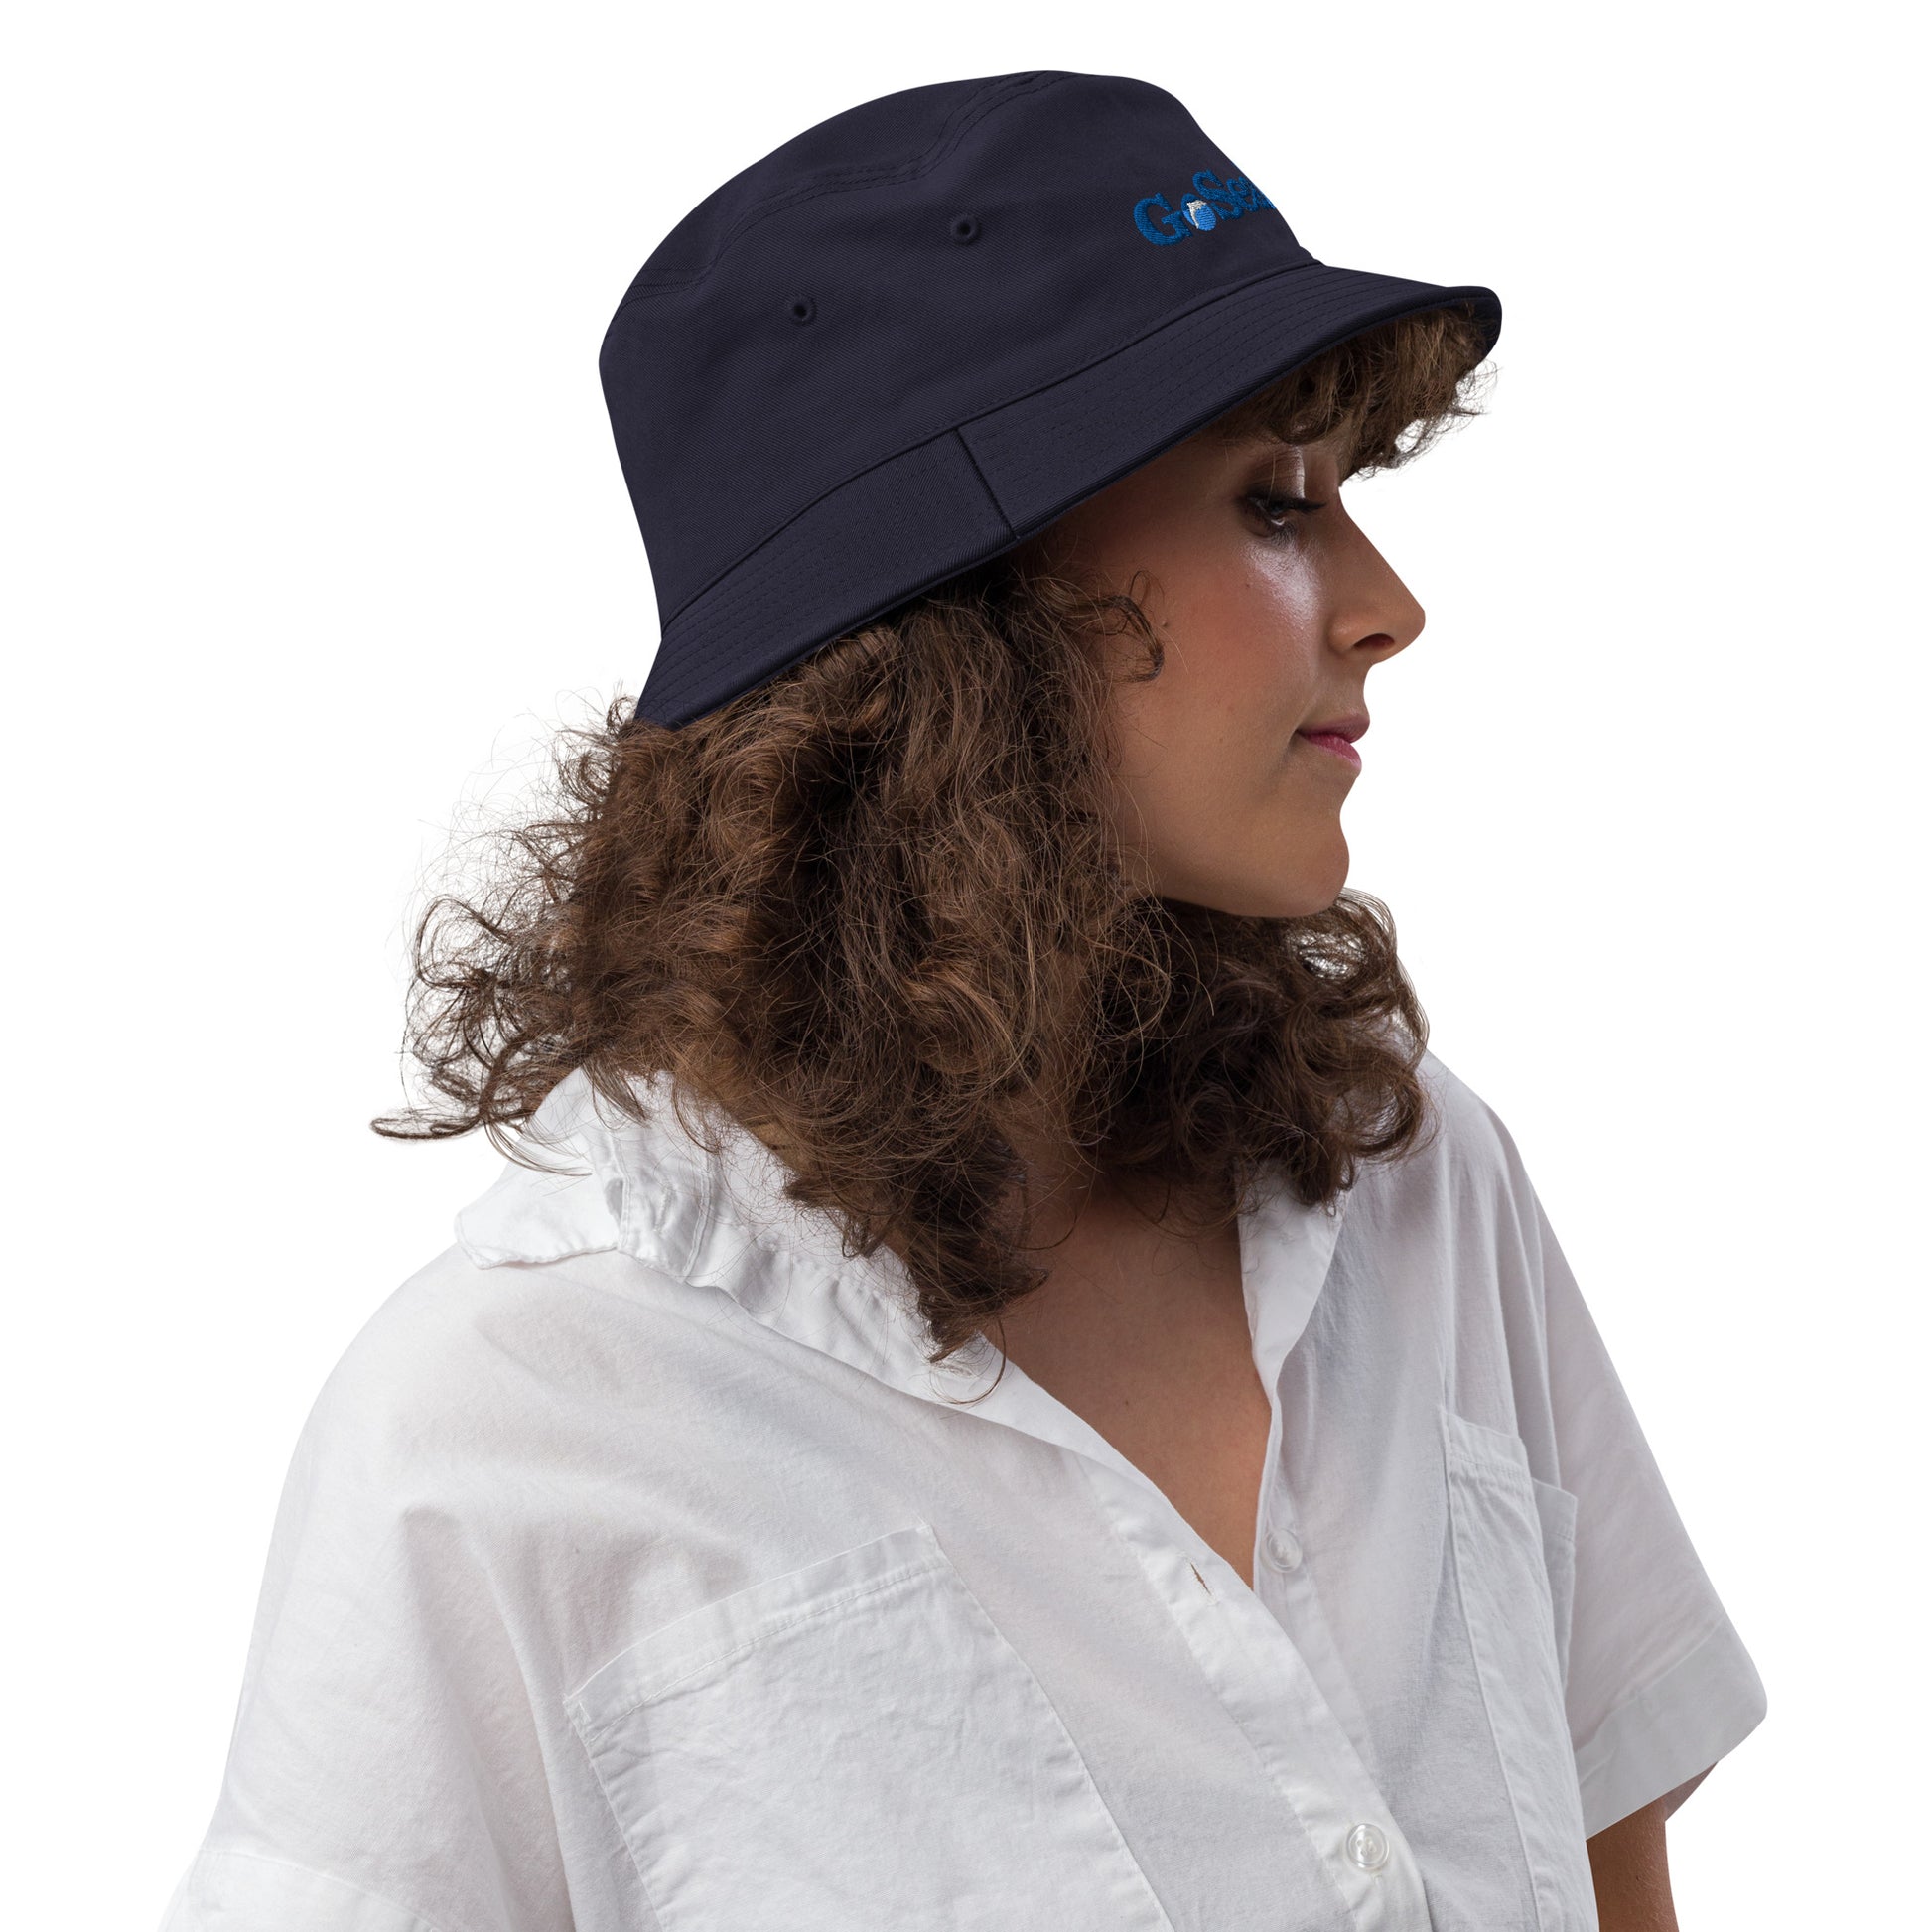  Unisex Bucket Hat - Navy - Side view on woman's head - Go Sea Kayak Byron Bay logo on front  - Genuine Byron Bay Merchandise | Produced by Go Sea Kayak Byron Bay